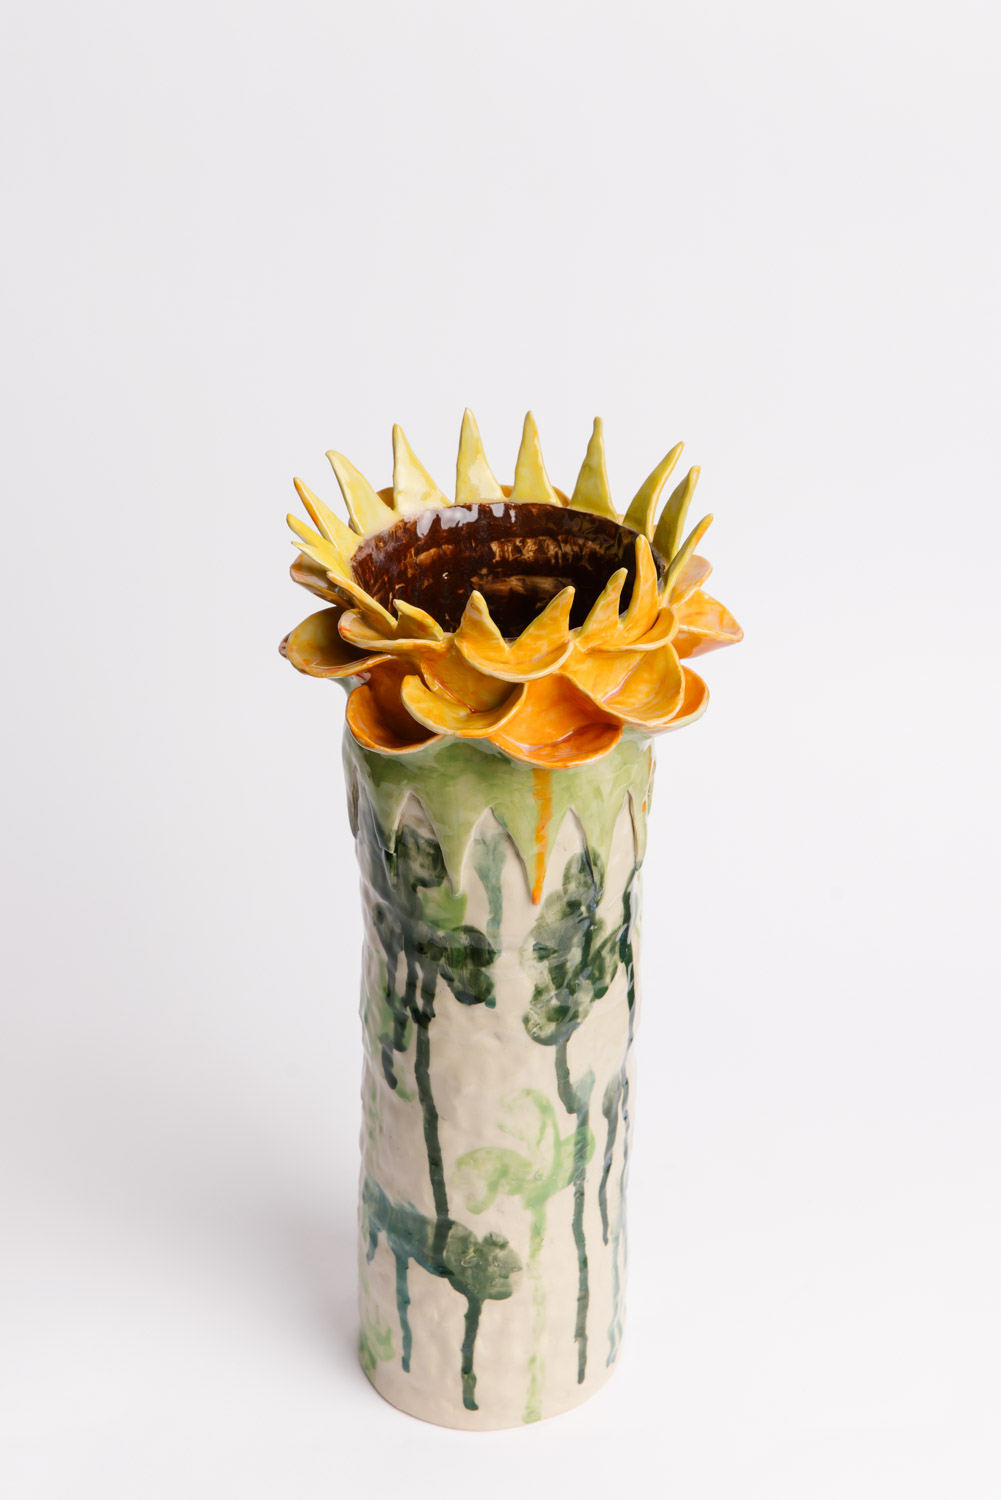 Large hand built ceramic vase emulating a sunflower, by Susan Buret, photo by Samee Lapham